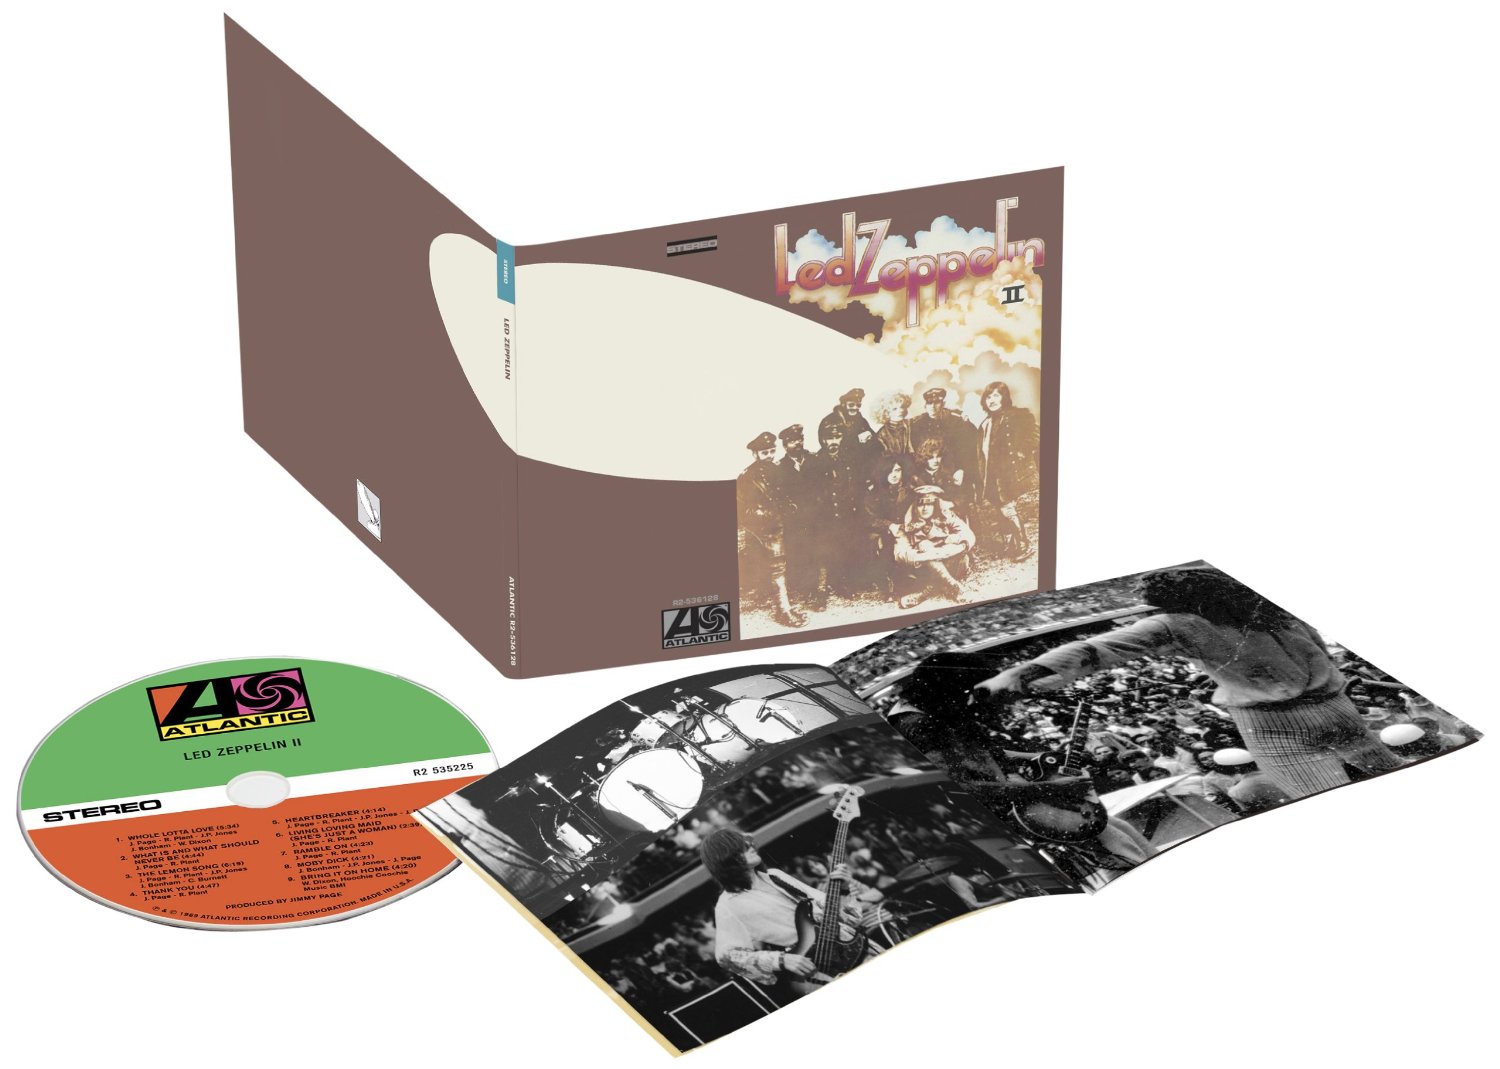 Led Zeppelin "Led Zeppelin II" CD